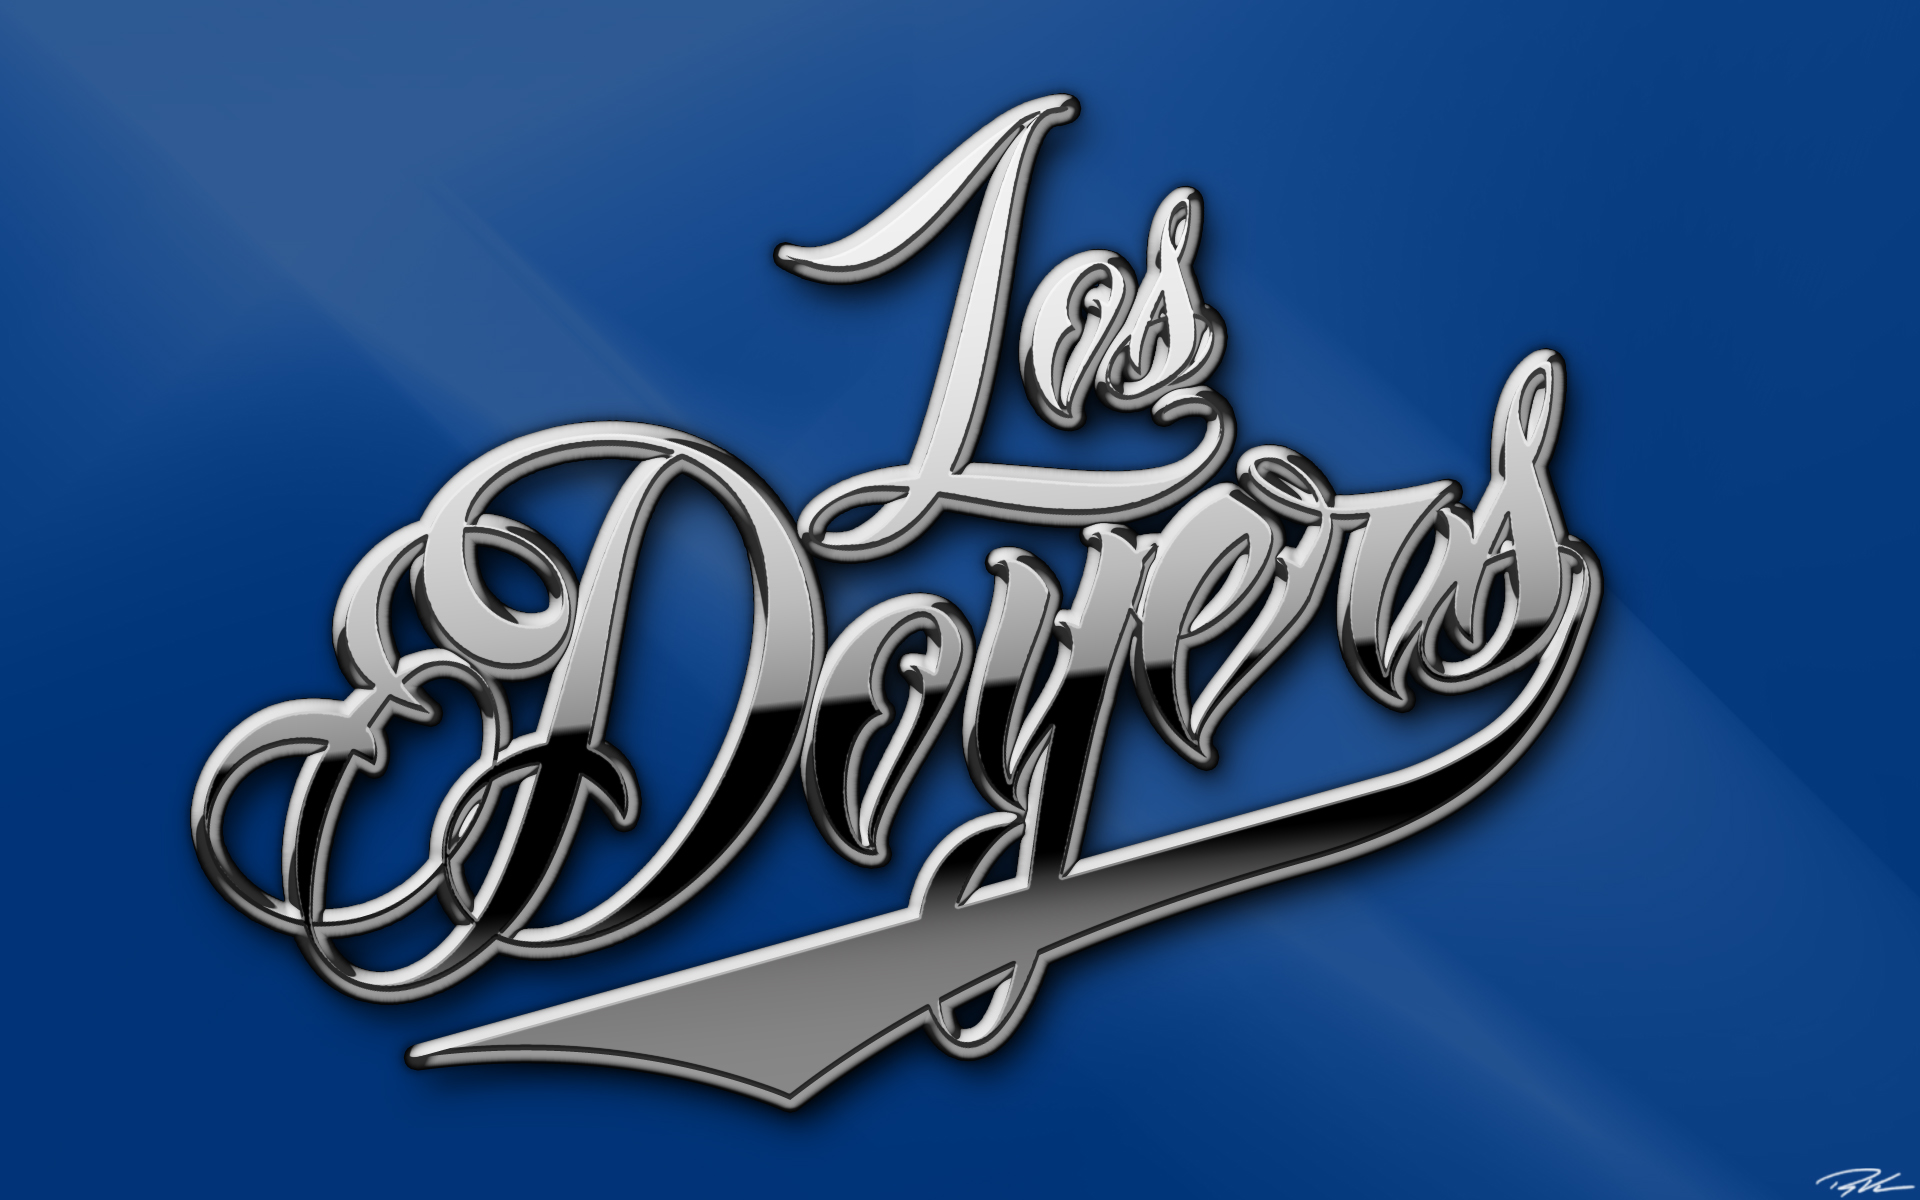 LA Dodgers wallpaper by GoZags22  Download on ZEDGE  e769